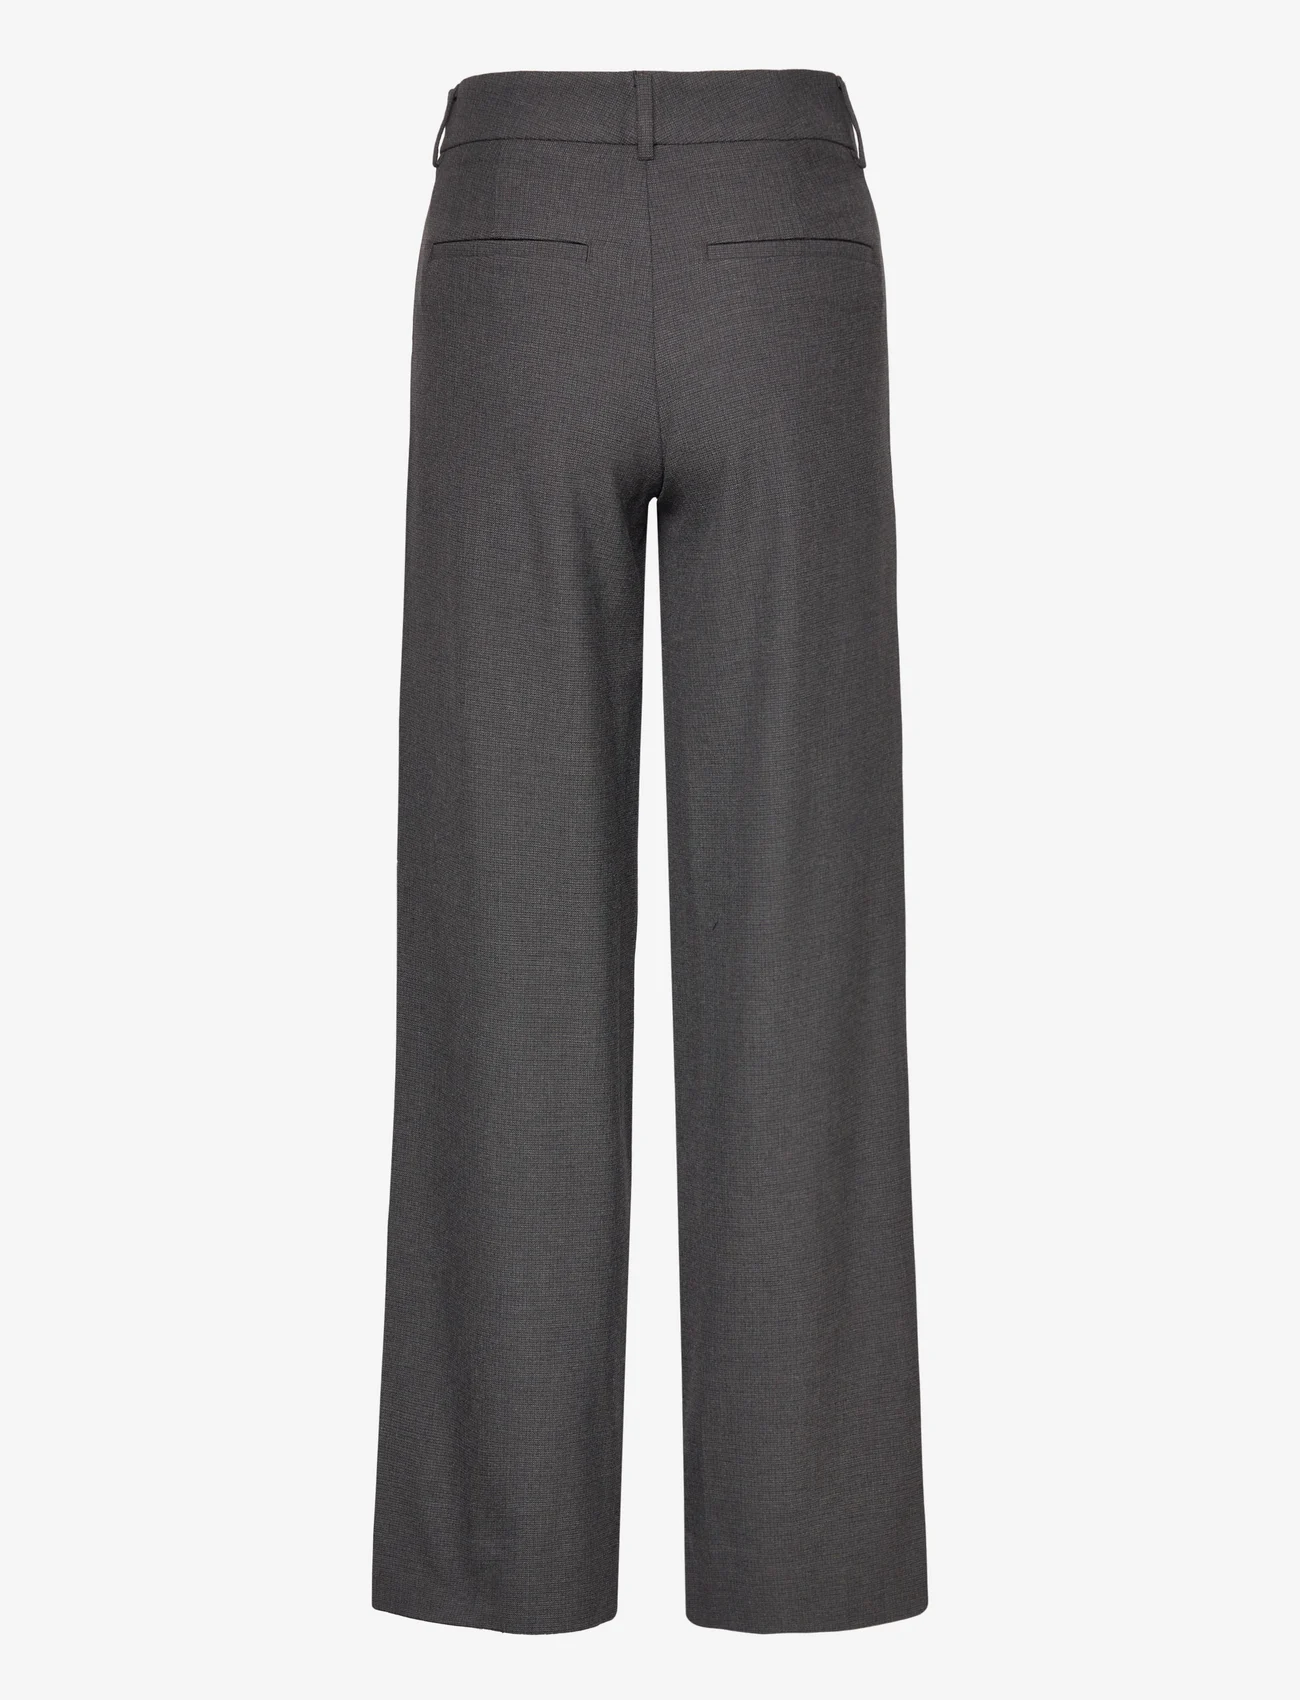 FIVEUNITS - Dena - straight leg trousers - navy brown grid - 1